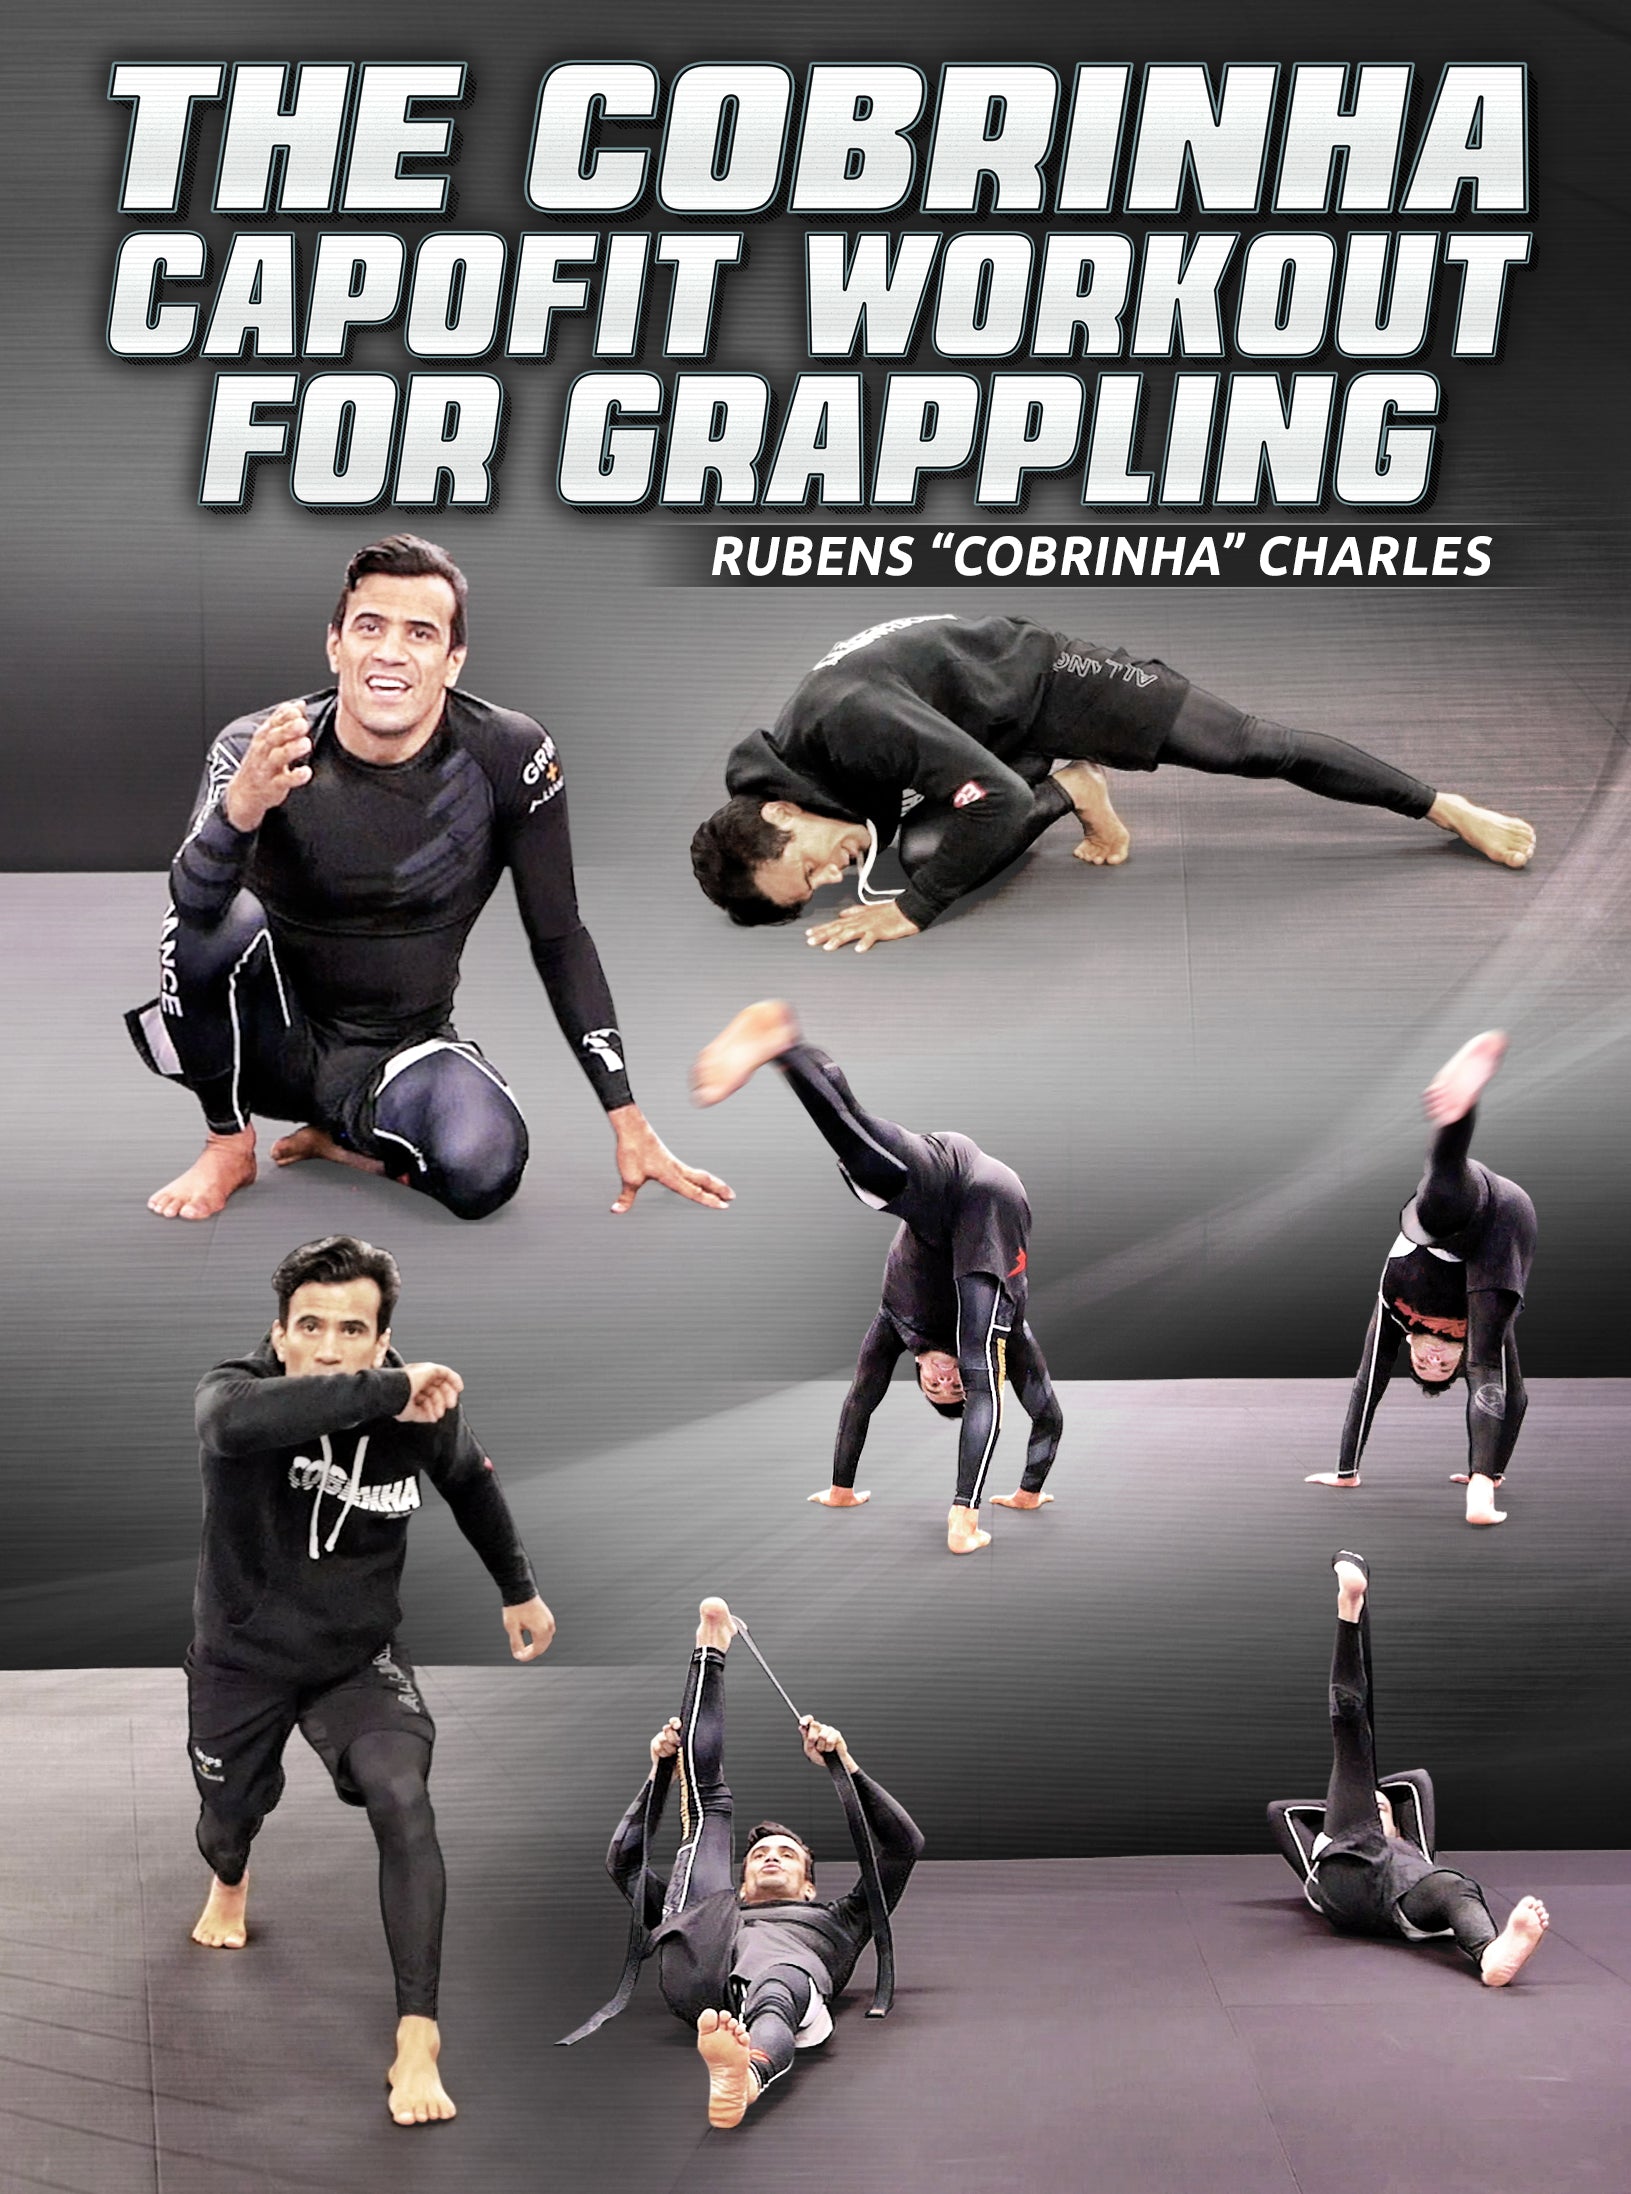 The Cobrinha CapoFit Workout For Grappling by Rubens Cobrinha Charles -  Digital